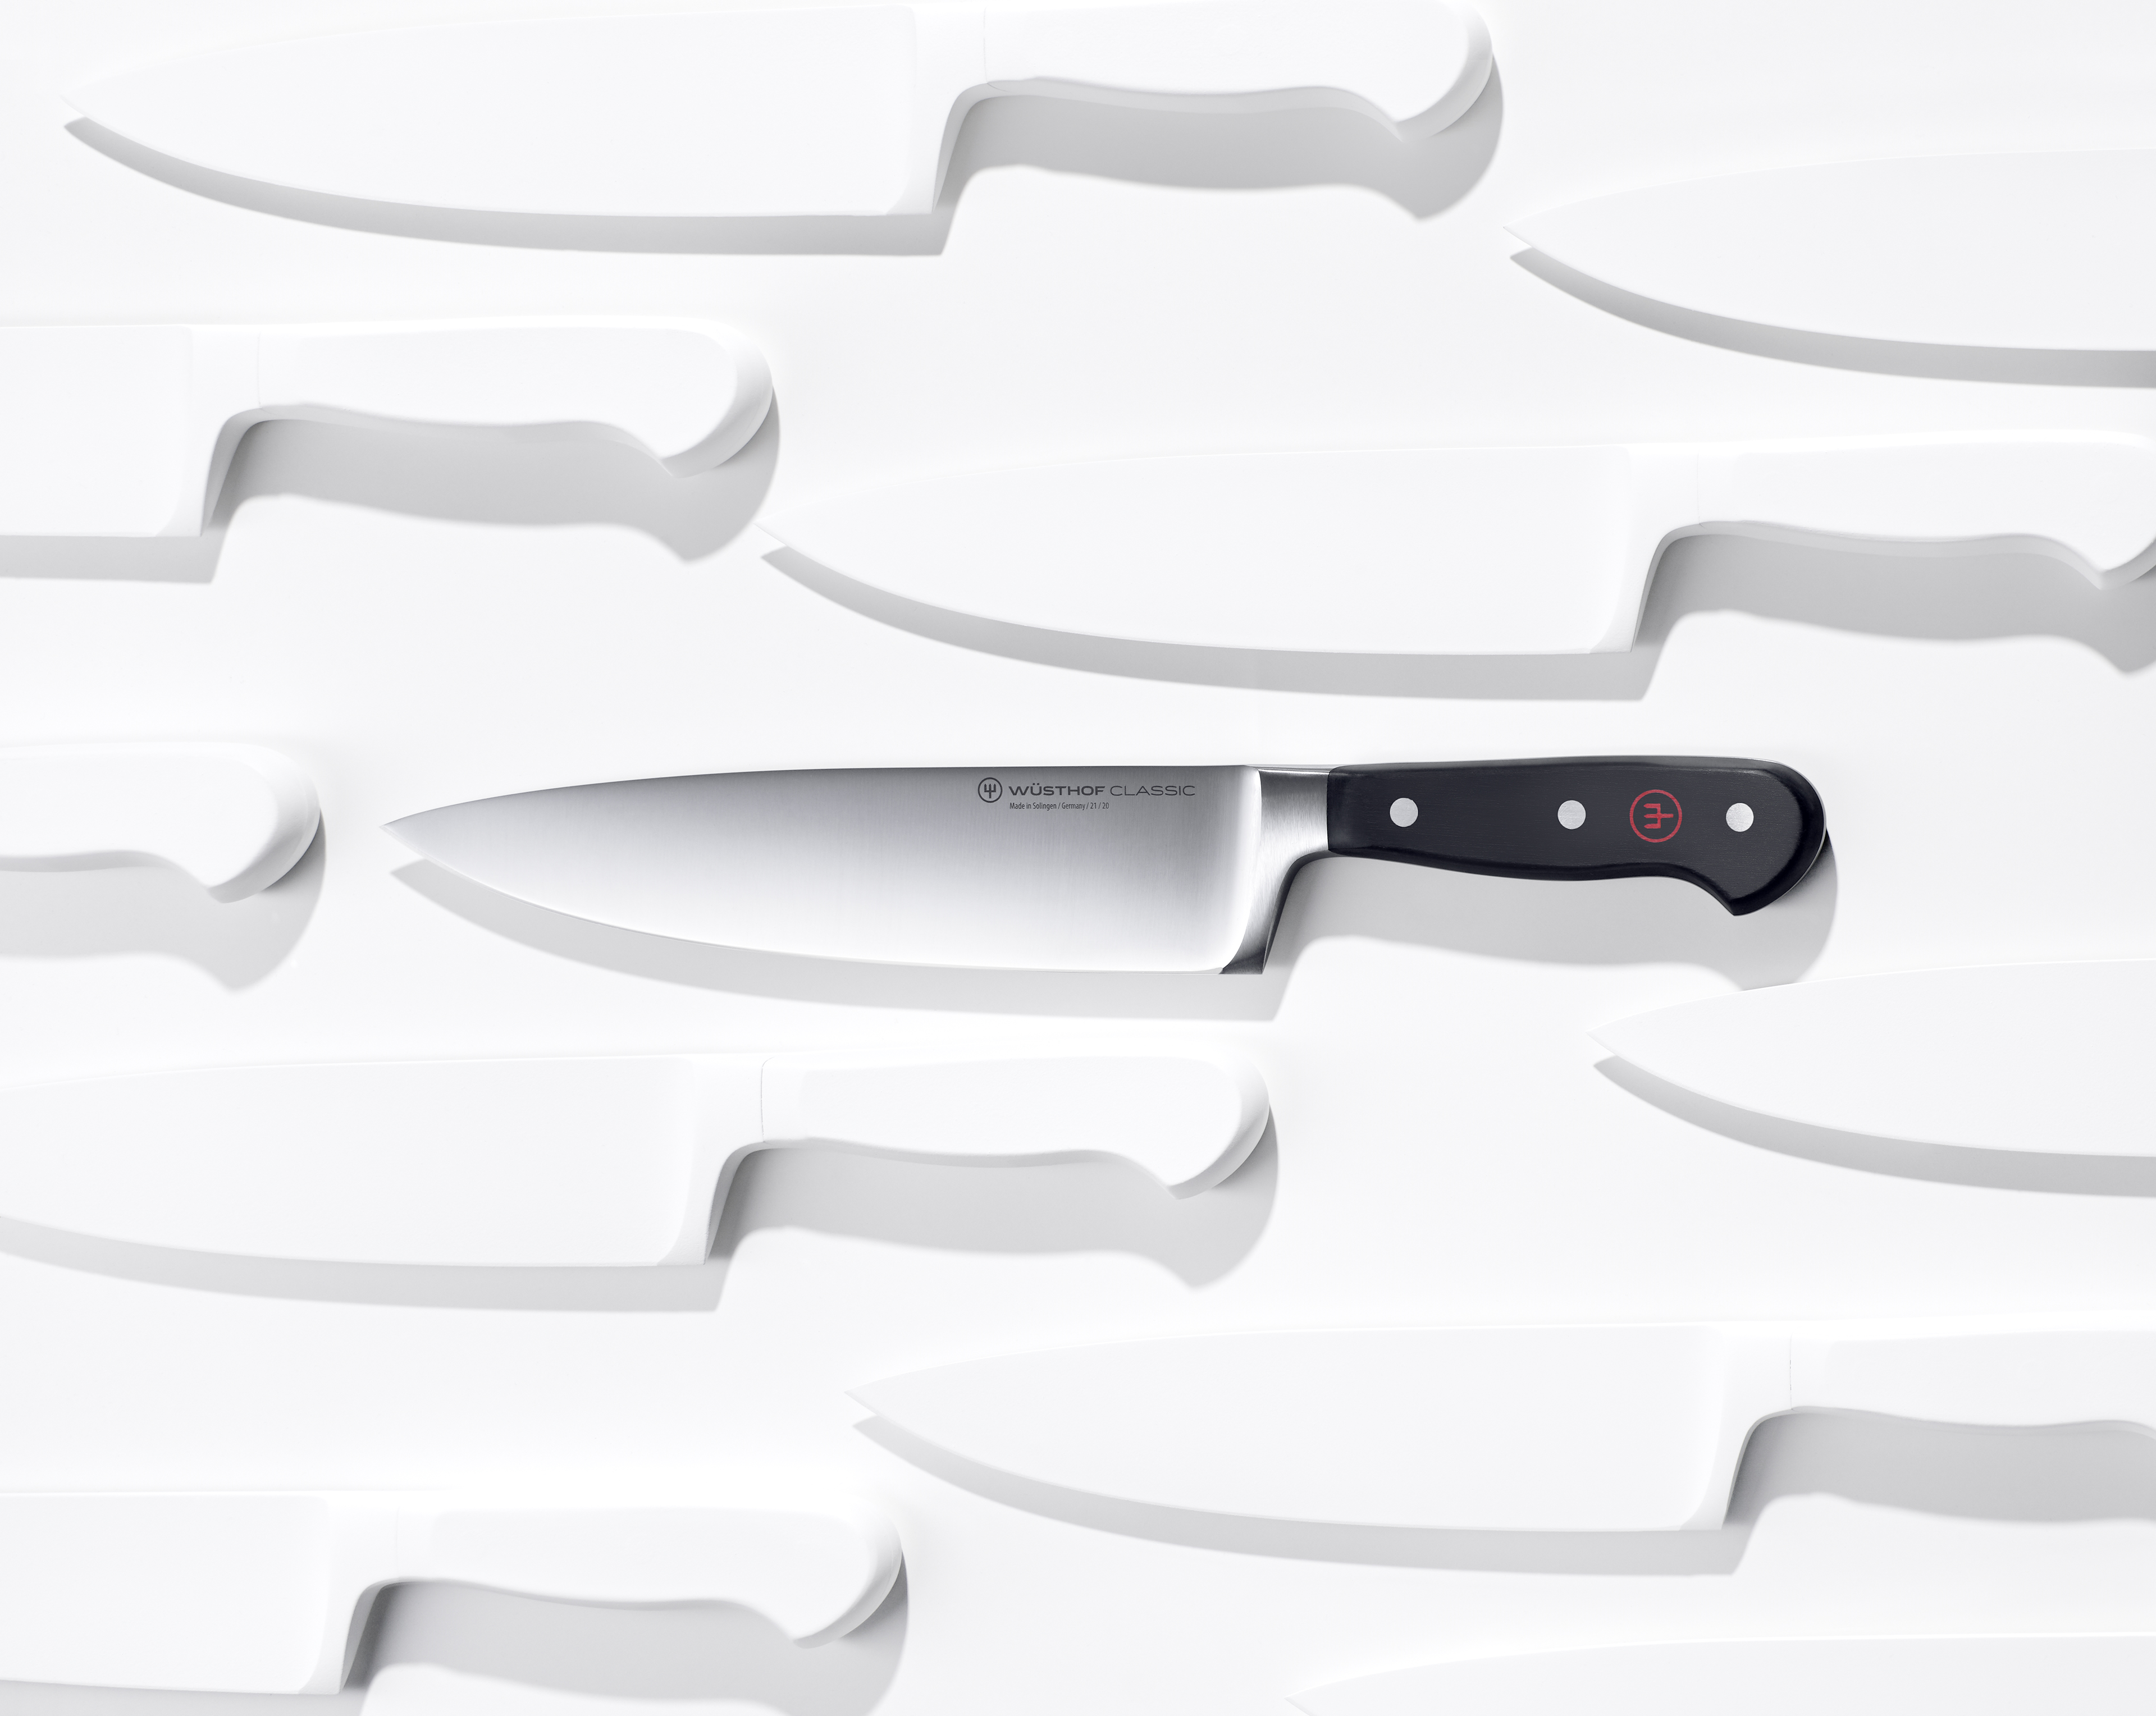 WÜSTHOF Classic 8" Chef's Knife "The Original"